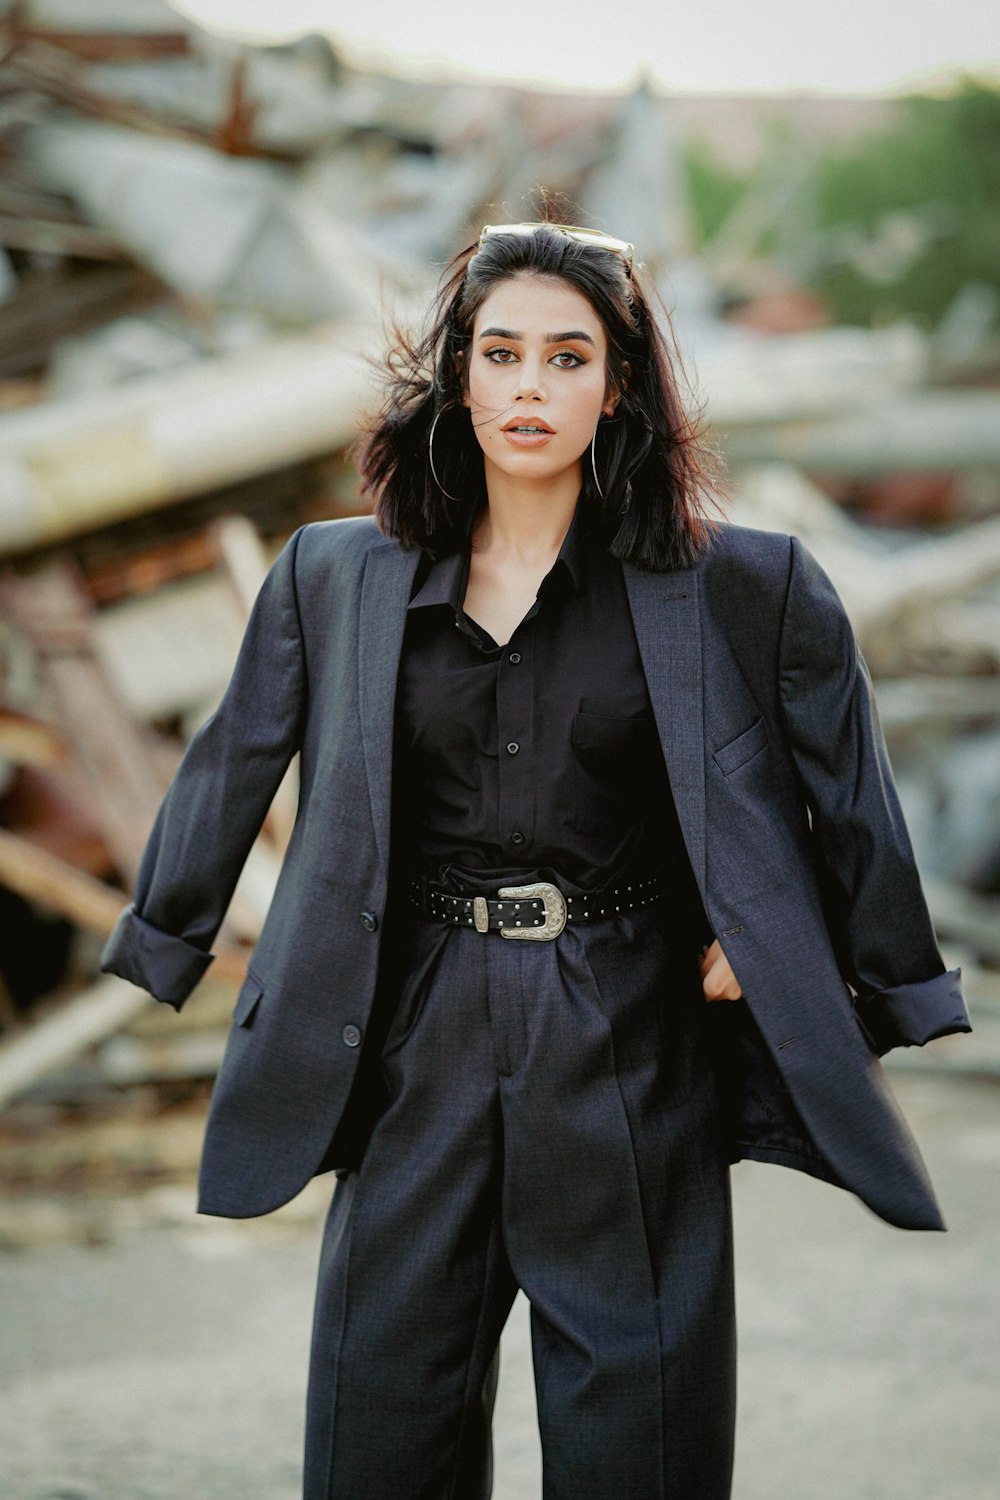 A woman wearing a black suit and black shirt photo – Free Jacket Image on  Unsplash